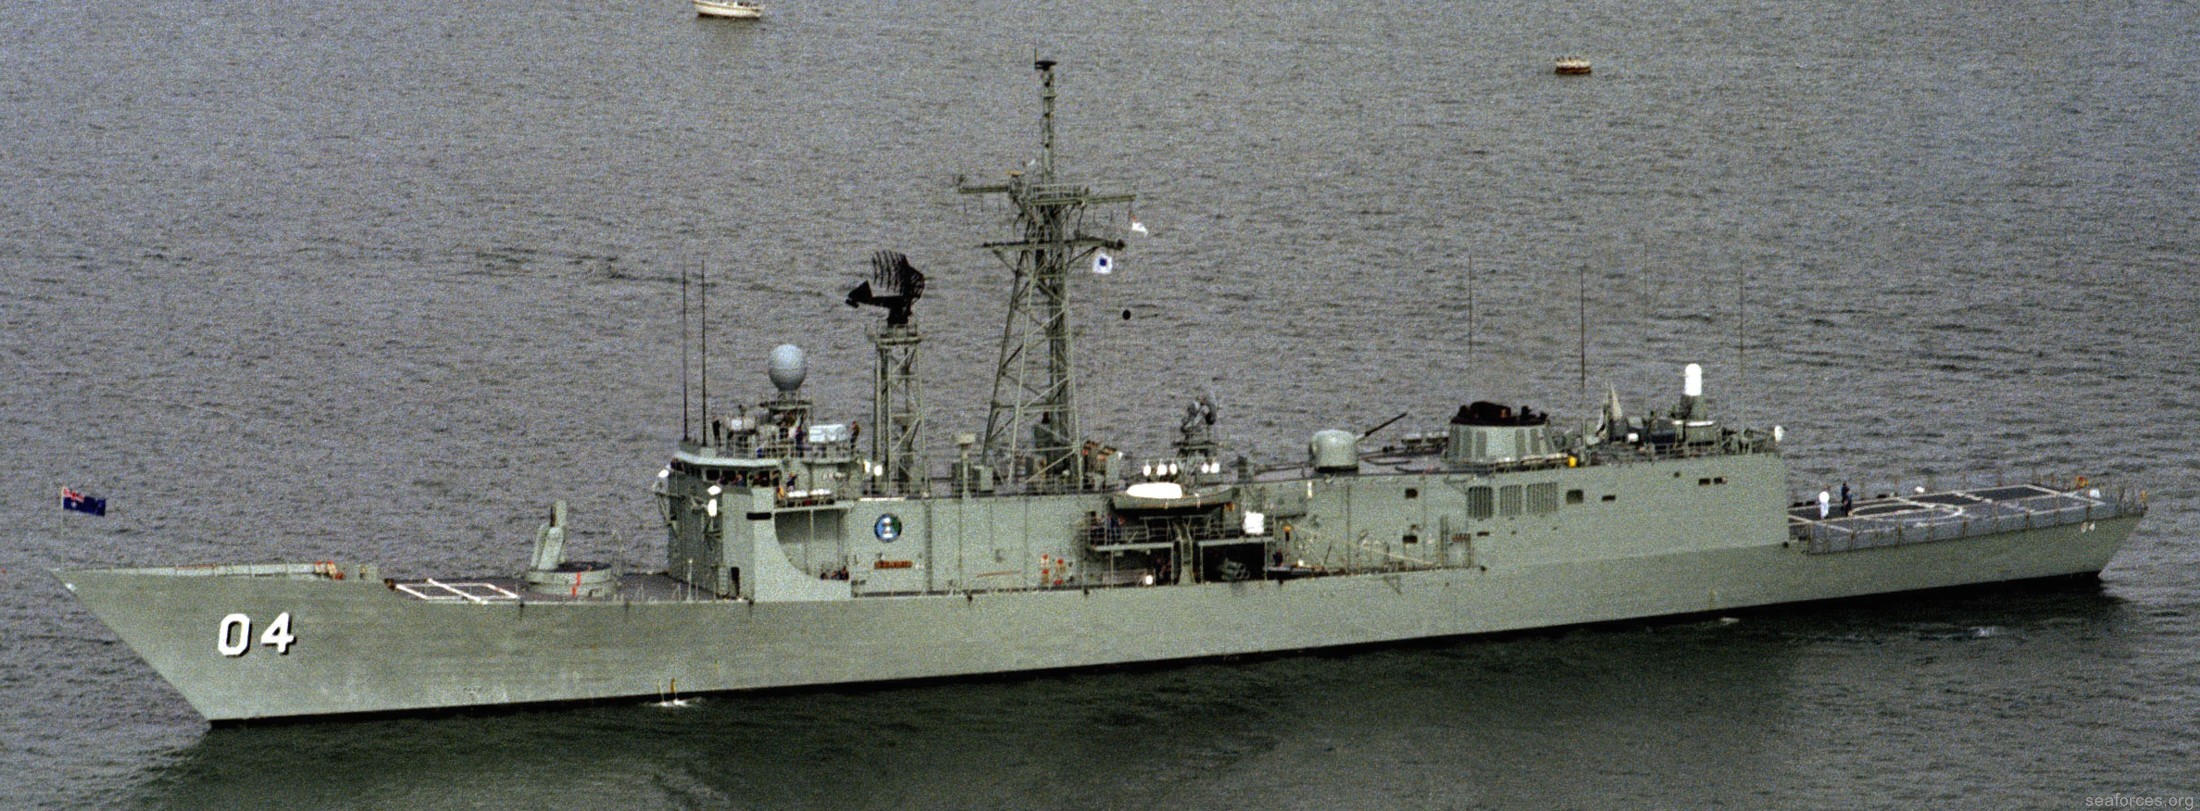 ffg-04 hmas darwin adelaide class frigate royal australian navy 1984 06